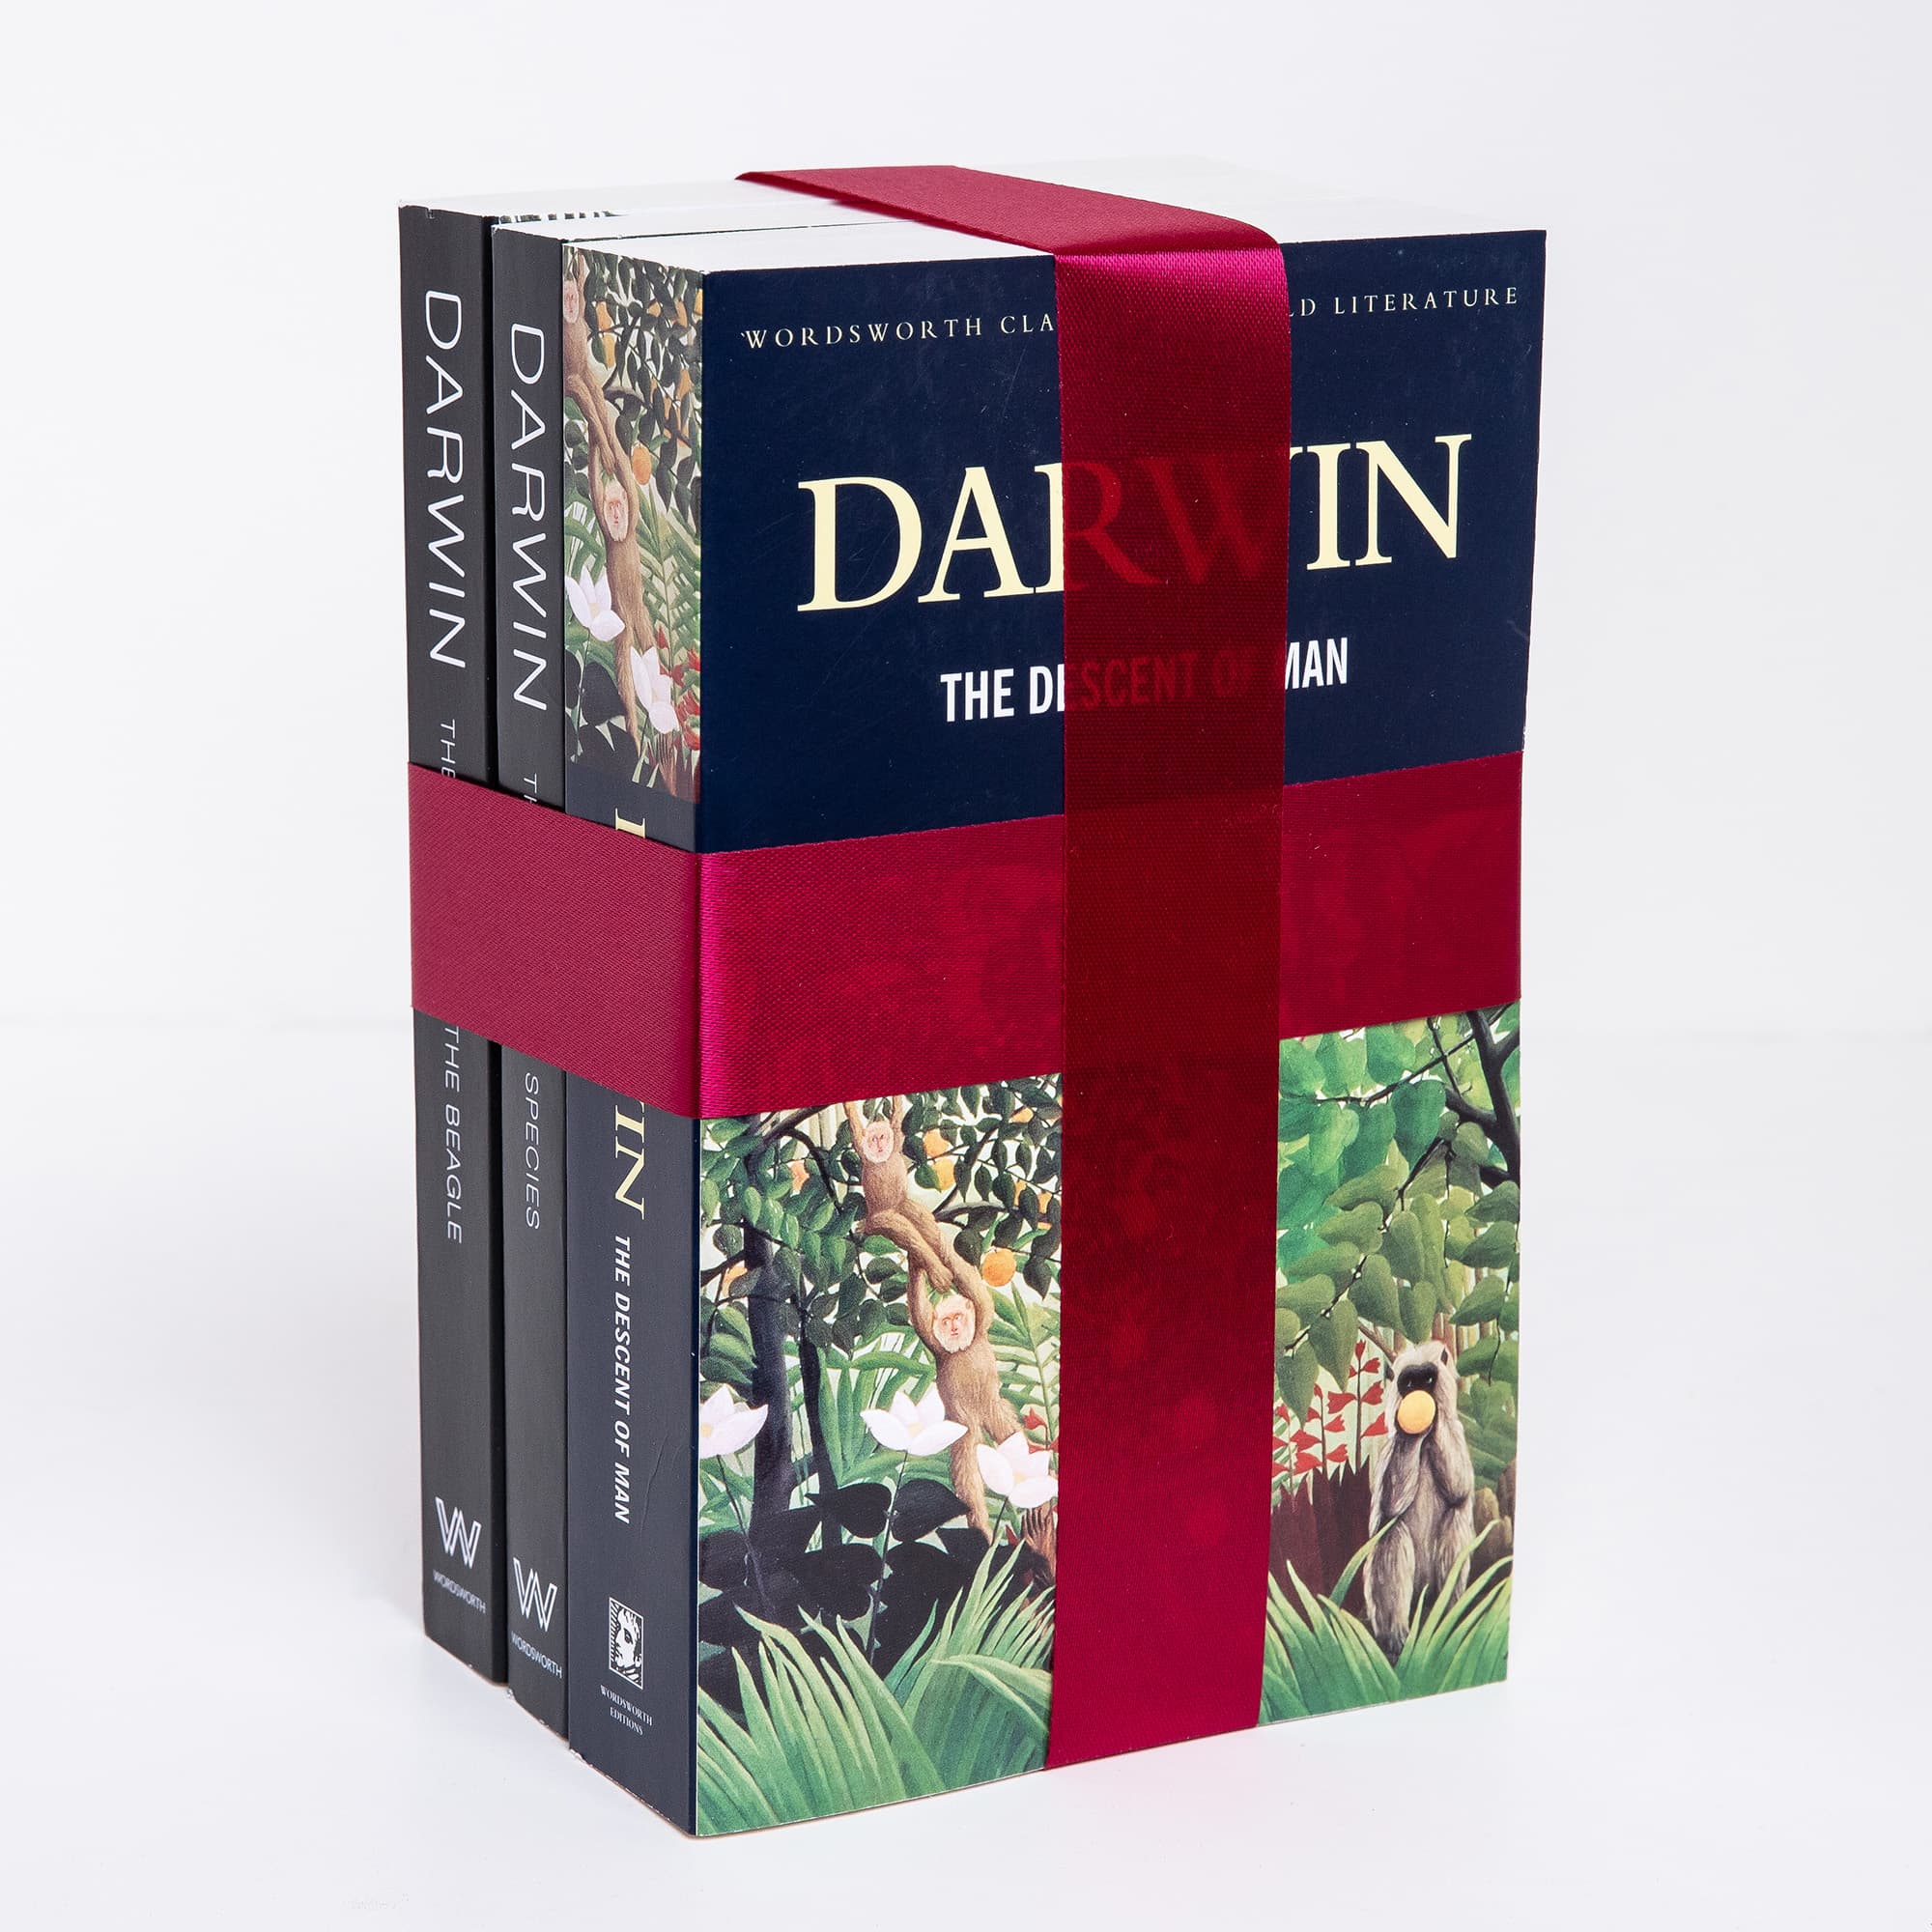 Darwin book gifts classic's